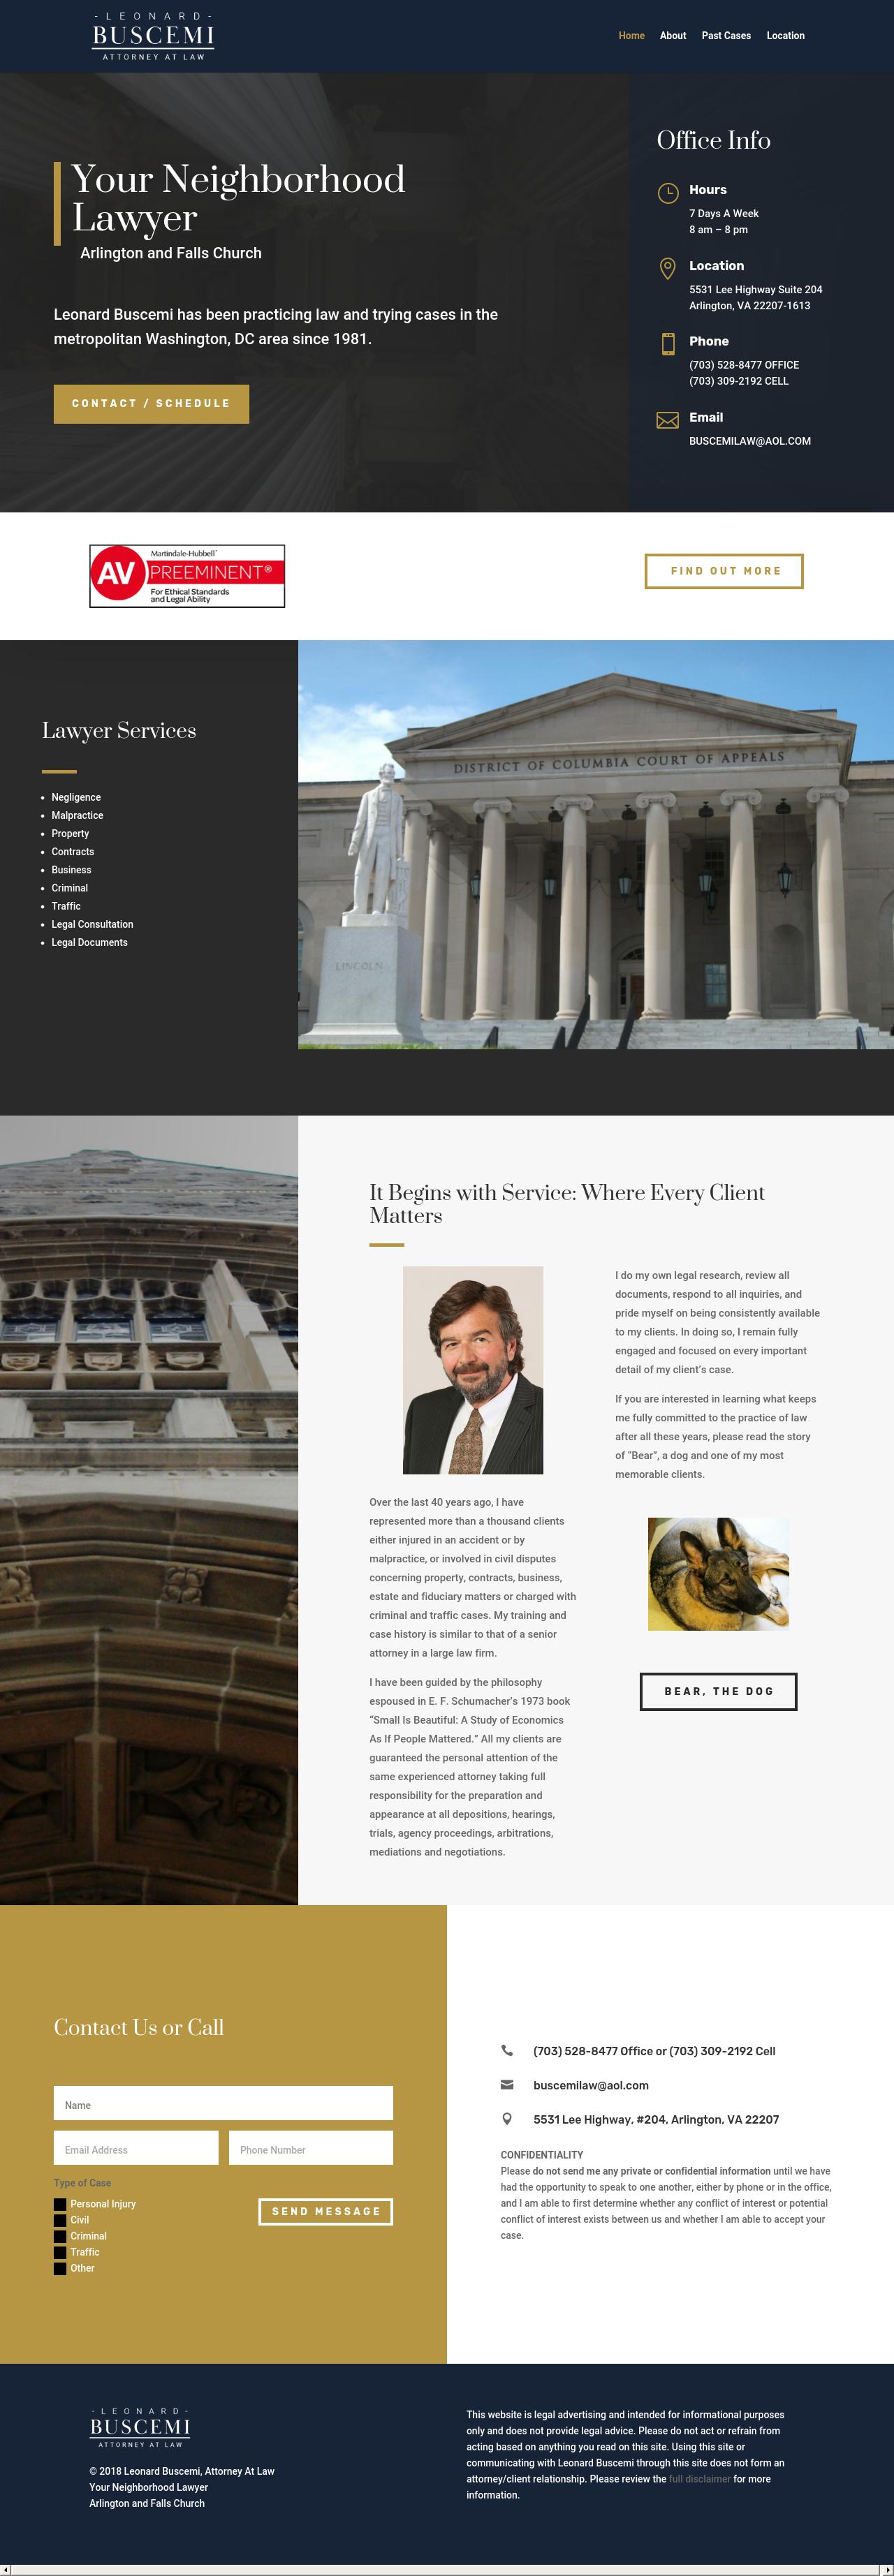 Law Offices of Leonard P. Buscemi - Arlington VA Lawyers